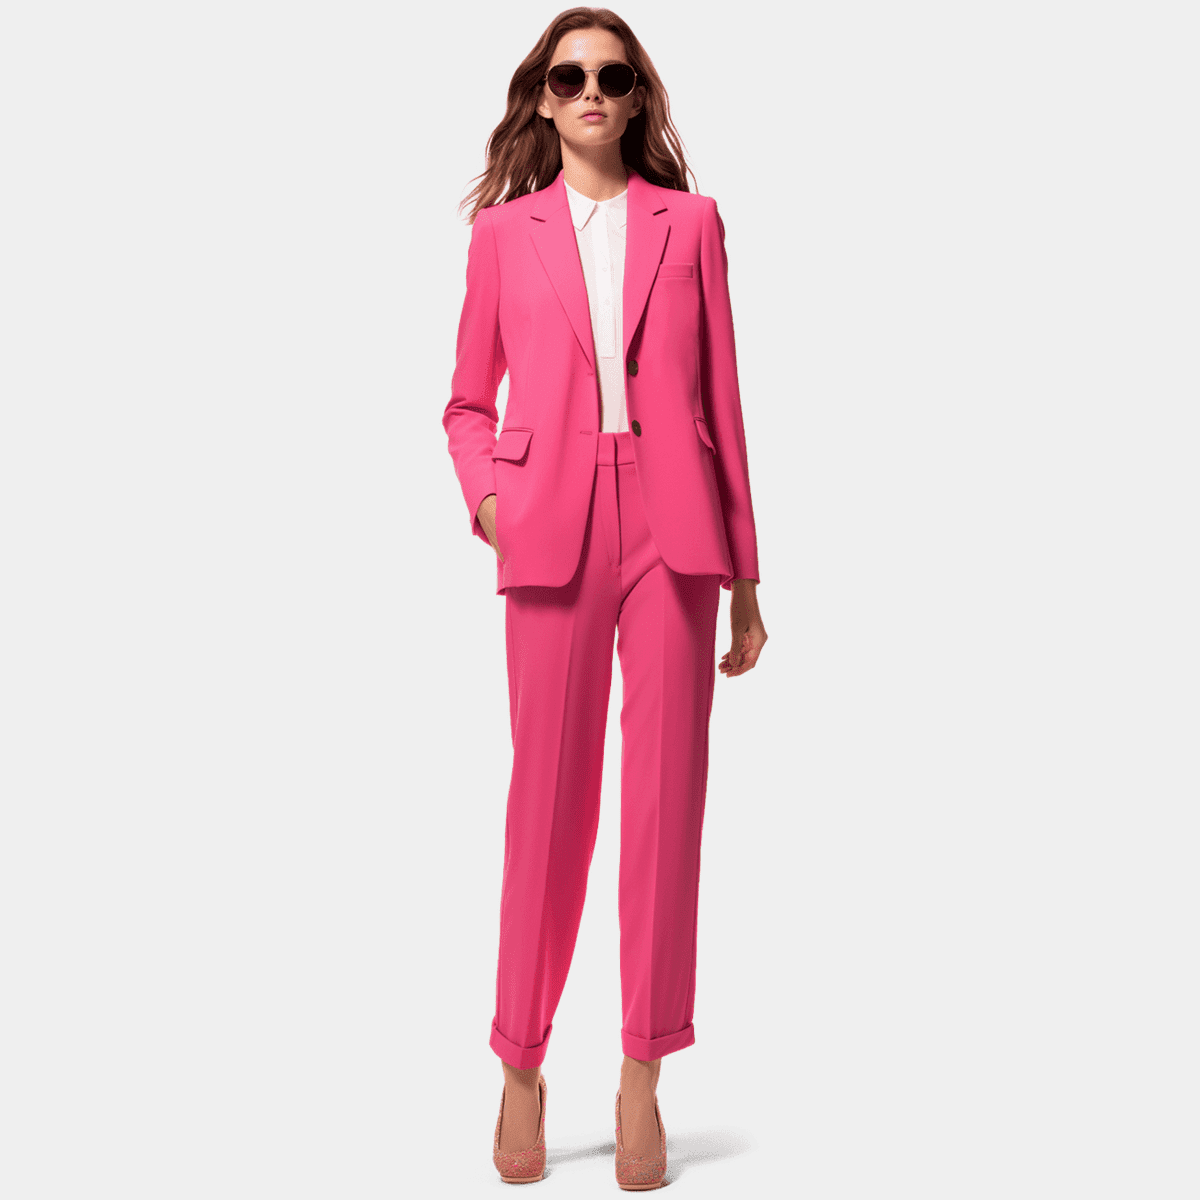 Women's Pink Suits Online - Sumissura